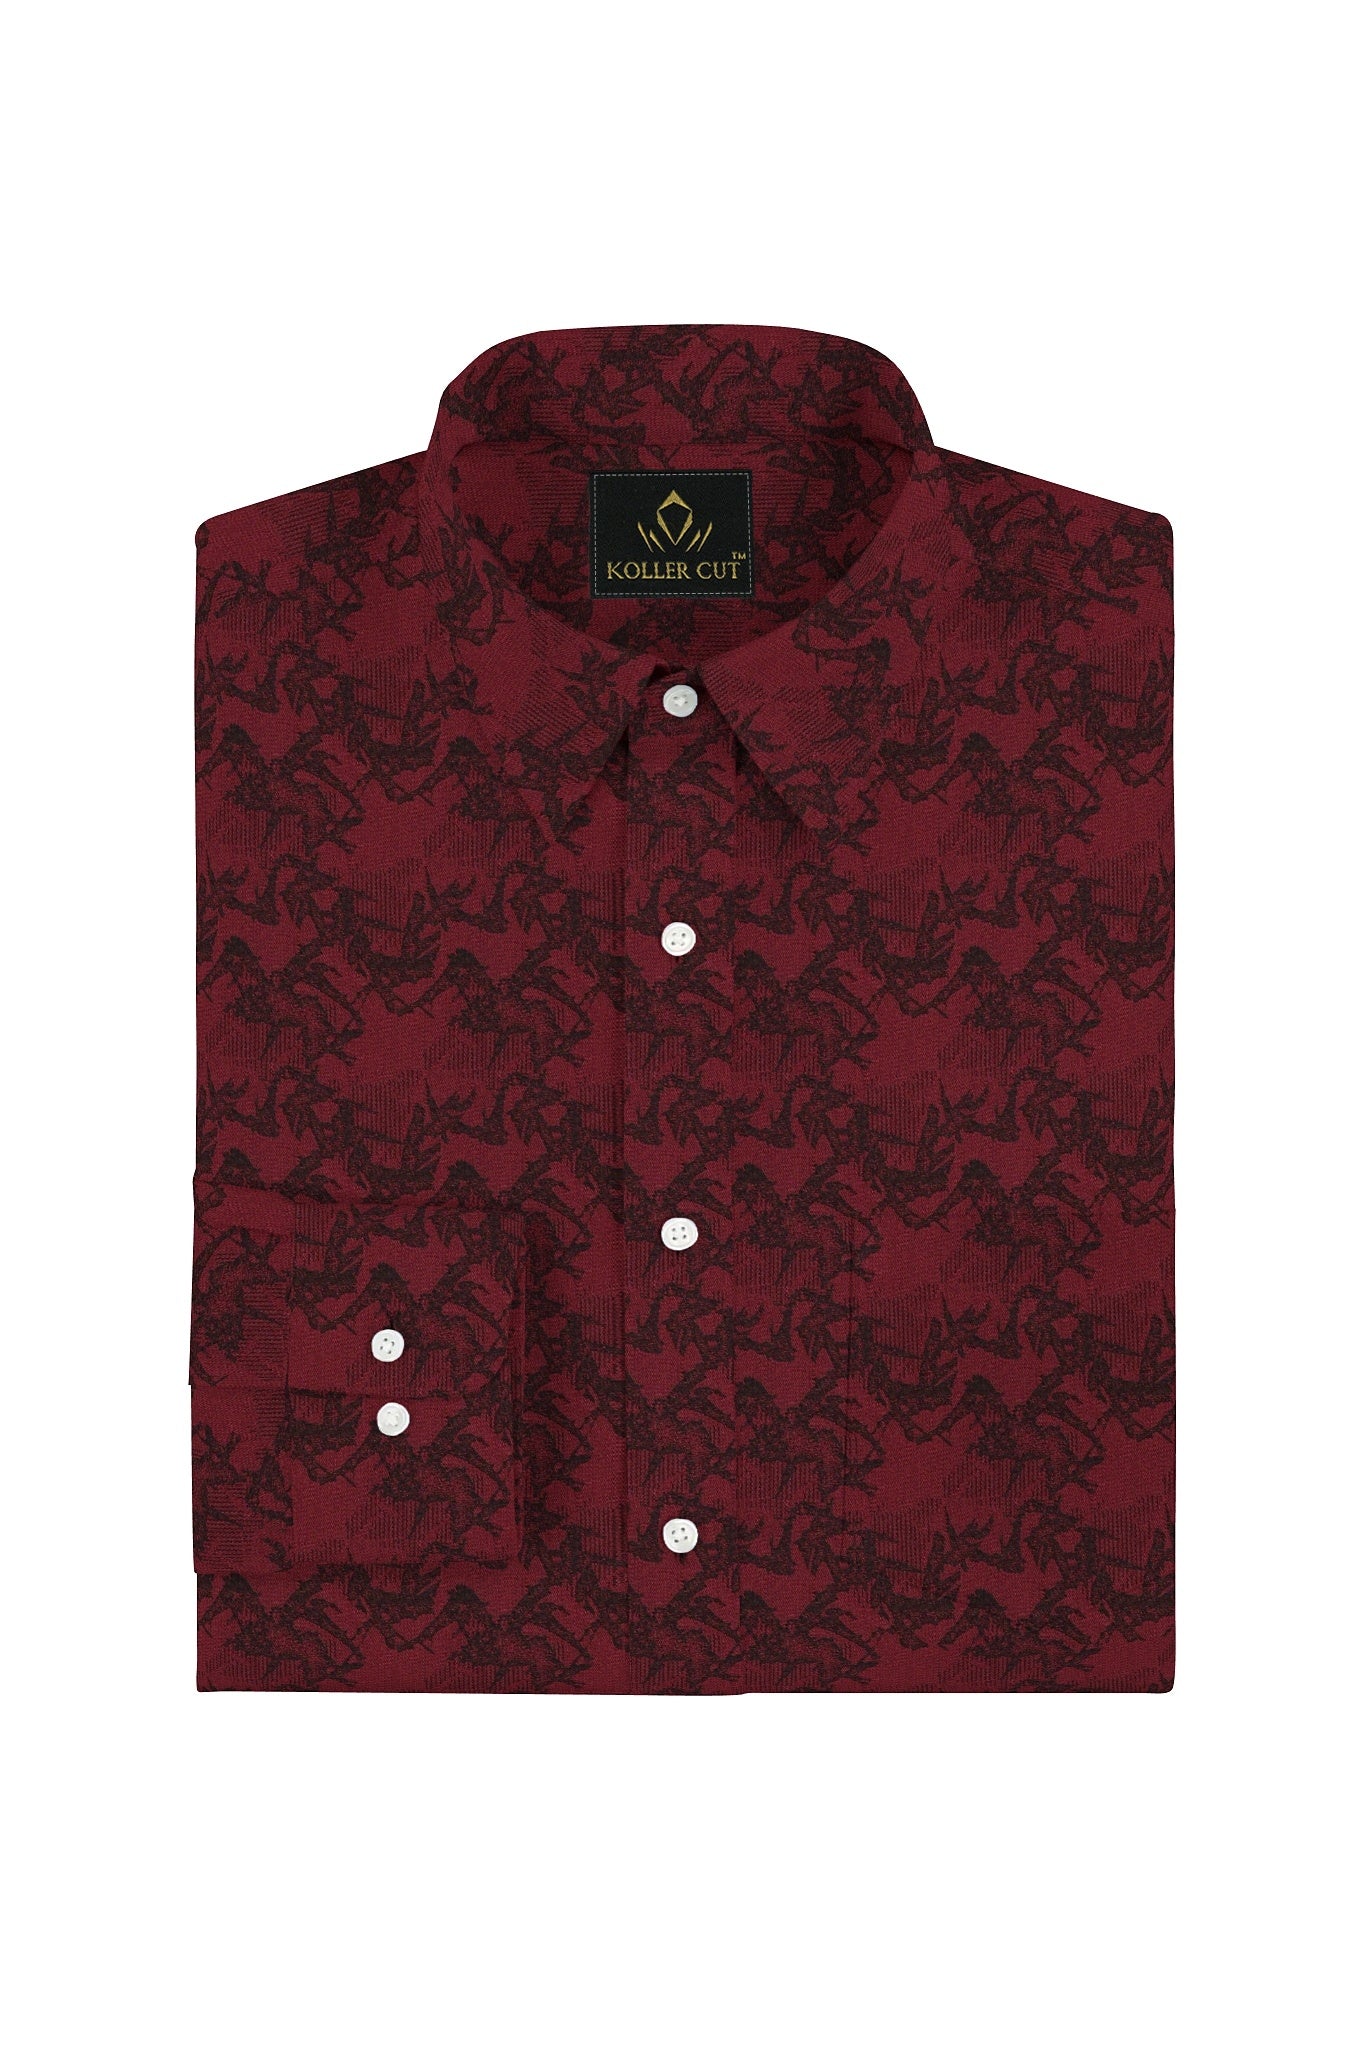 Carmine Red and Jade Black Jacquard Thorn Printed Egyptian Giza Cotton Shirt